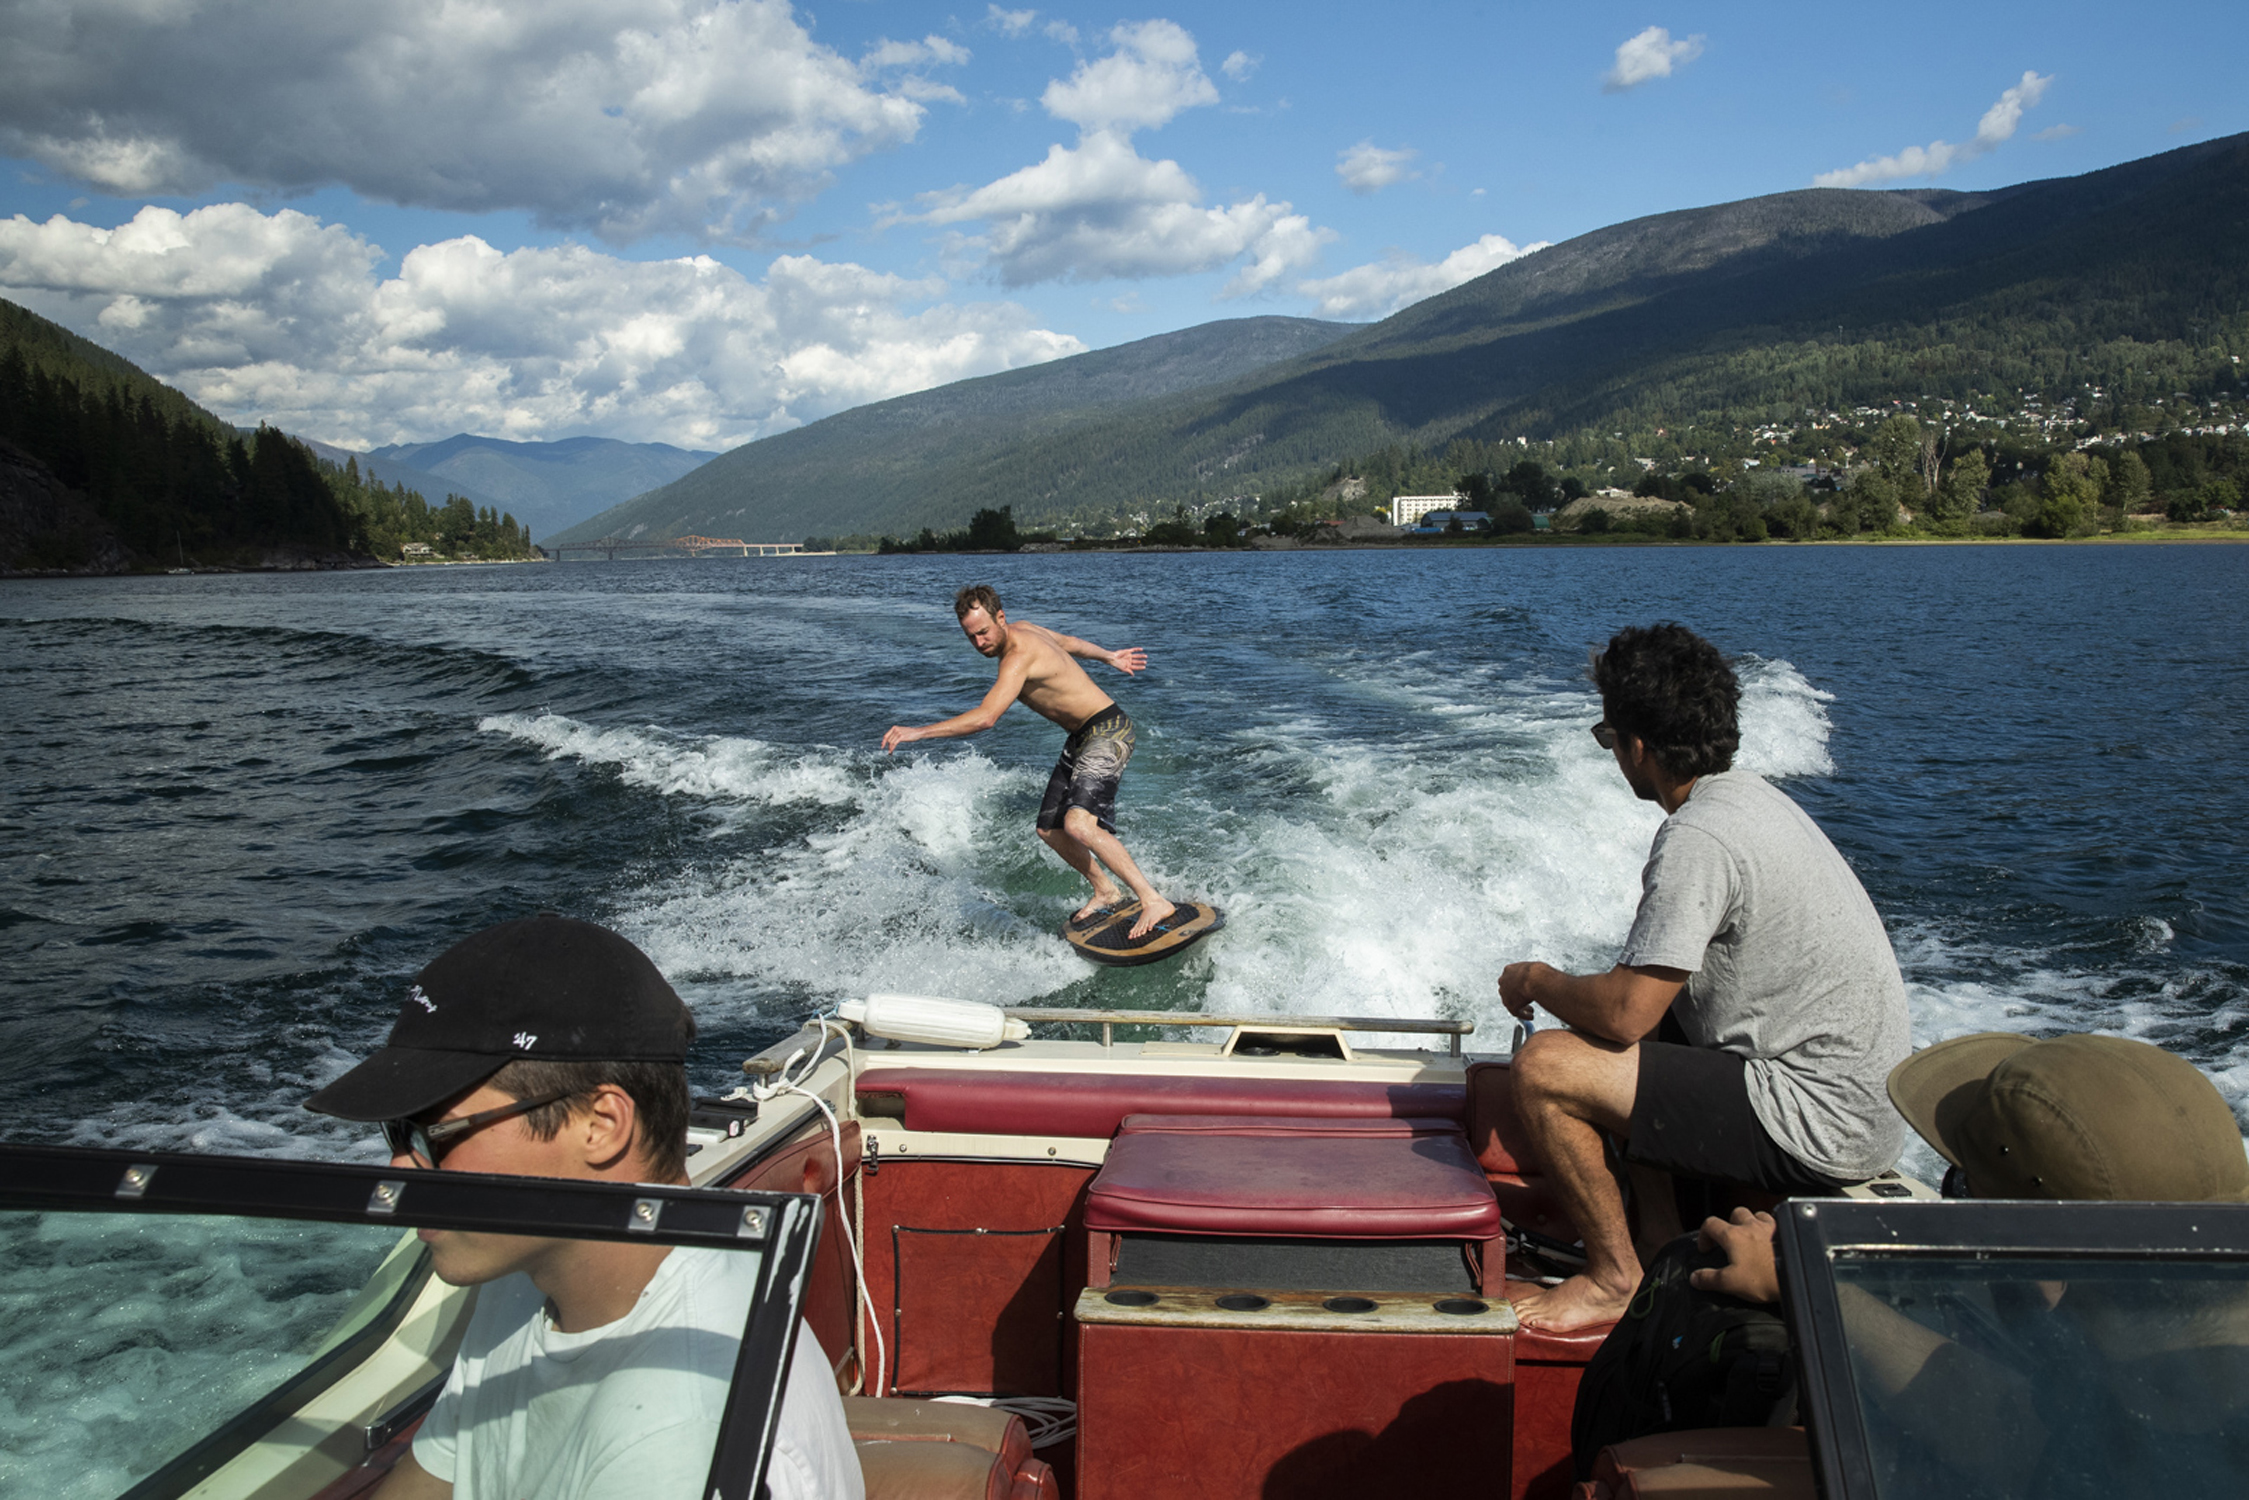 Kurt wake surfing back home in BC